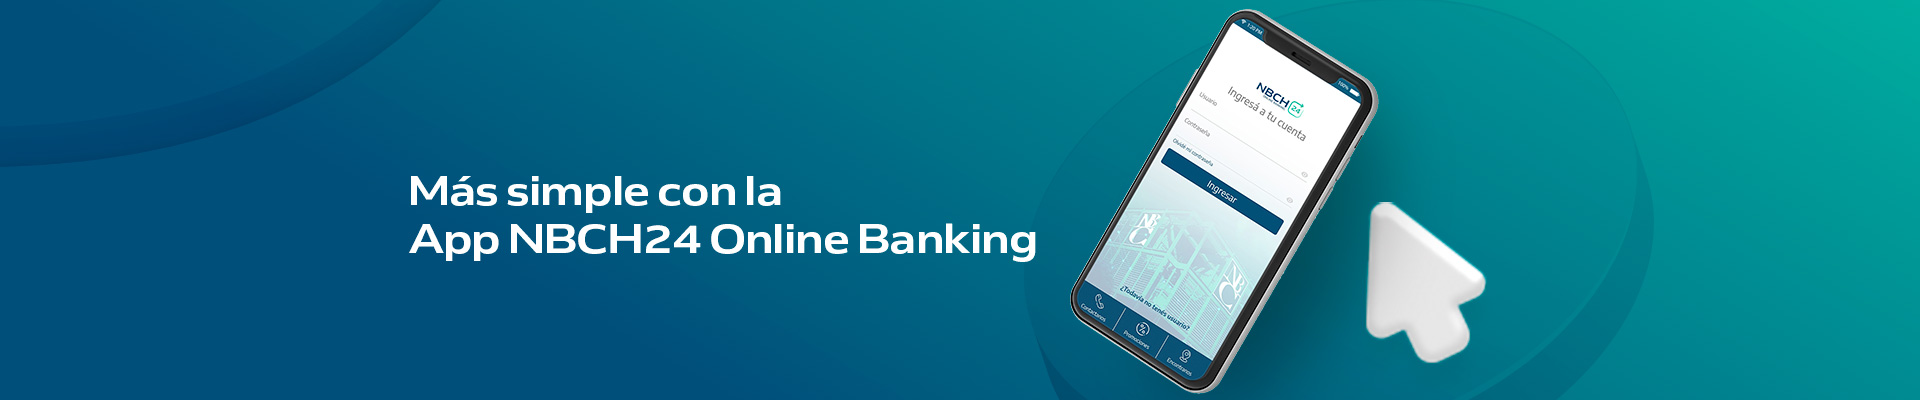 Online Banking APP